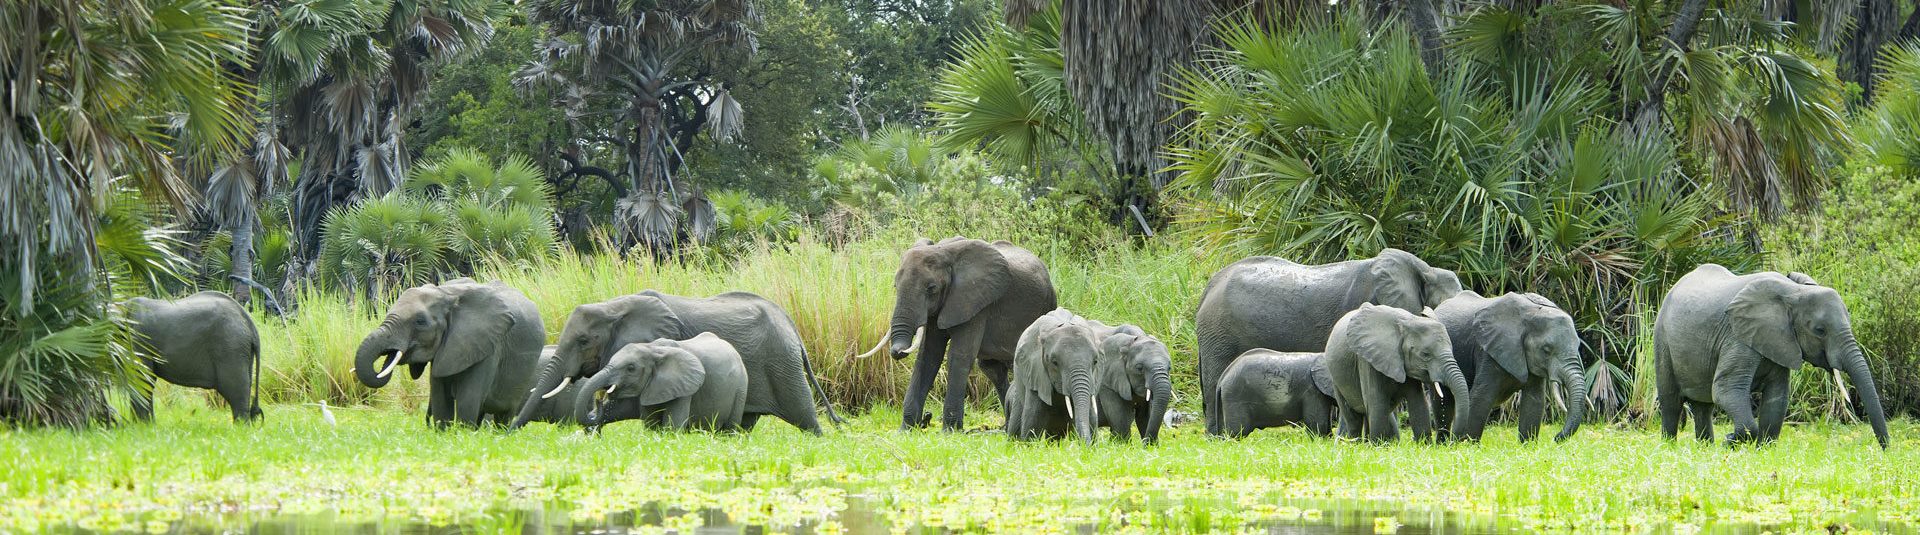 herd-of-elephants-and-water-selous